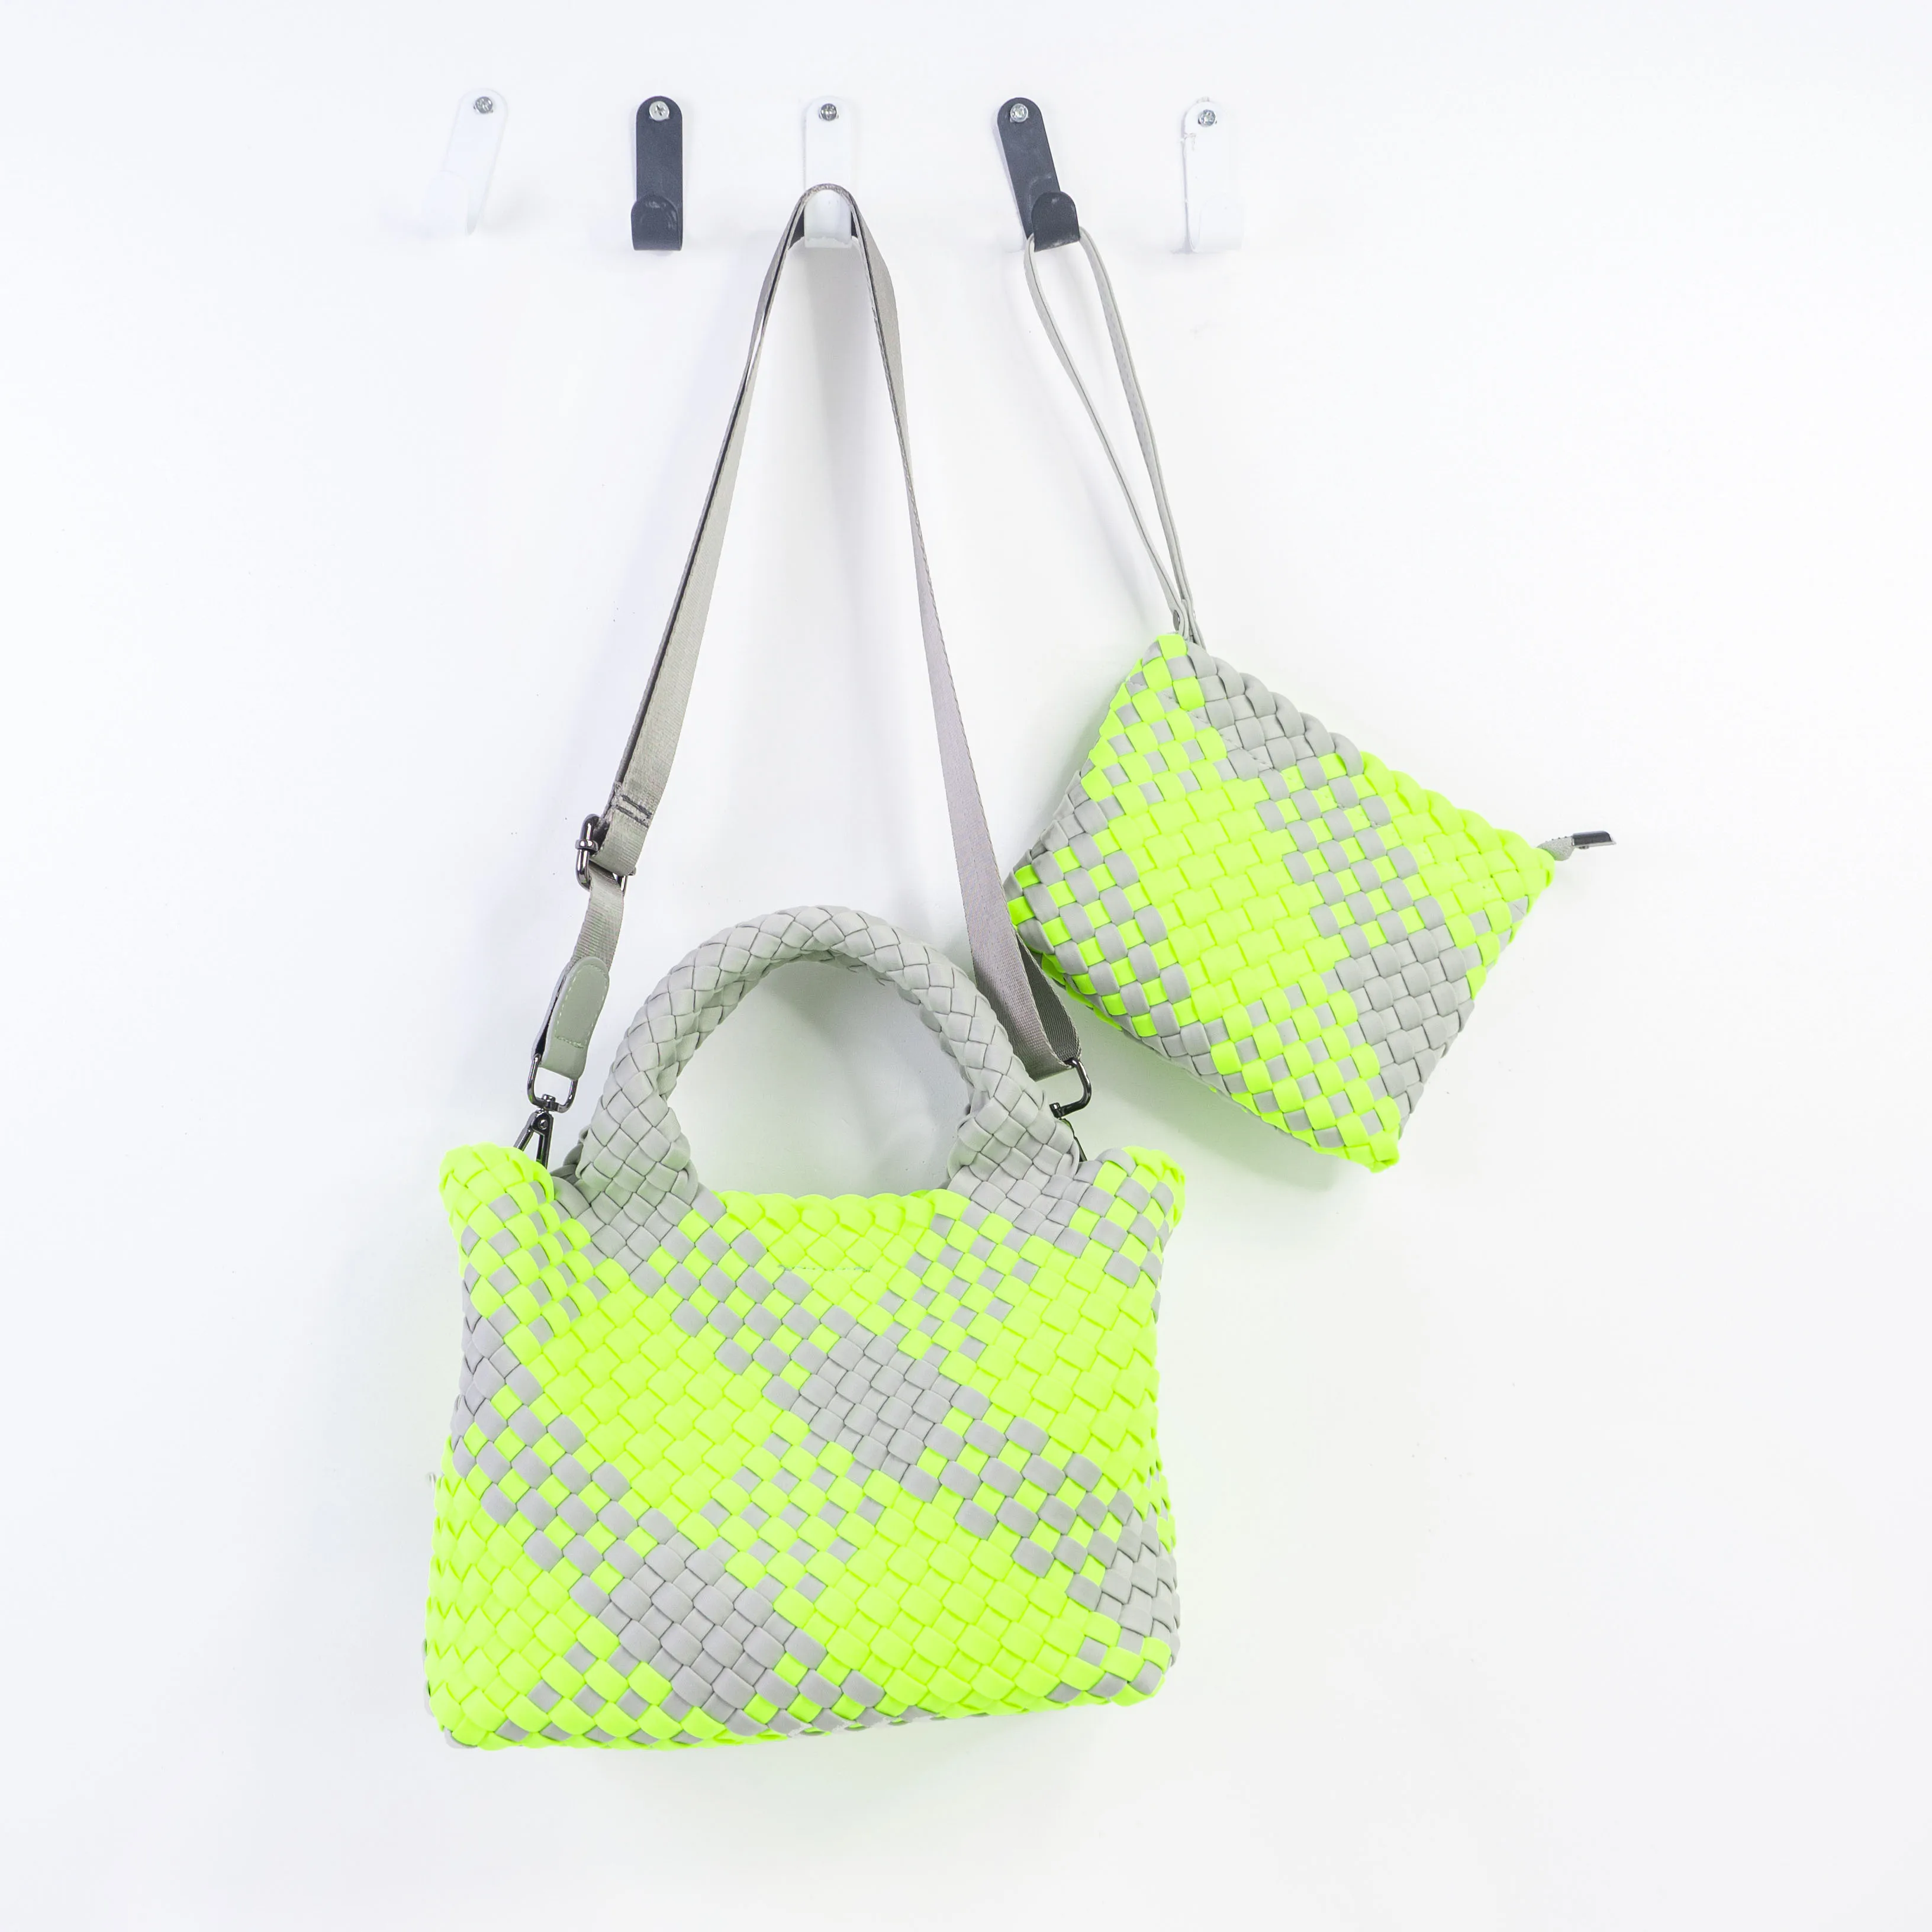 

HONOUR ME Woven Neoprene Bag hand-knitted Beach Tote Bags Hand Make bag